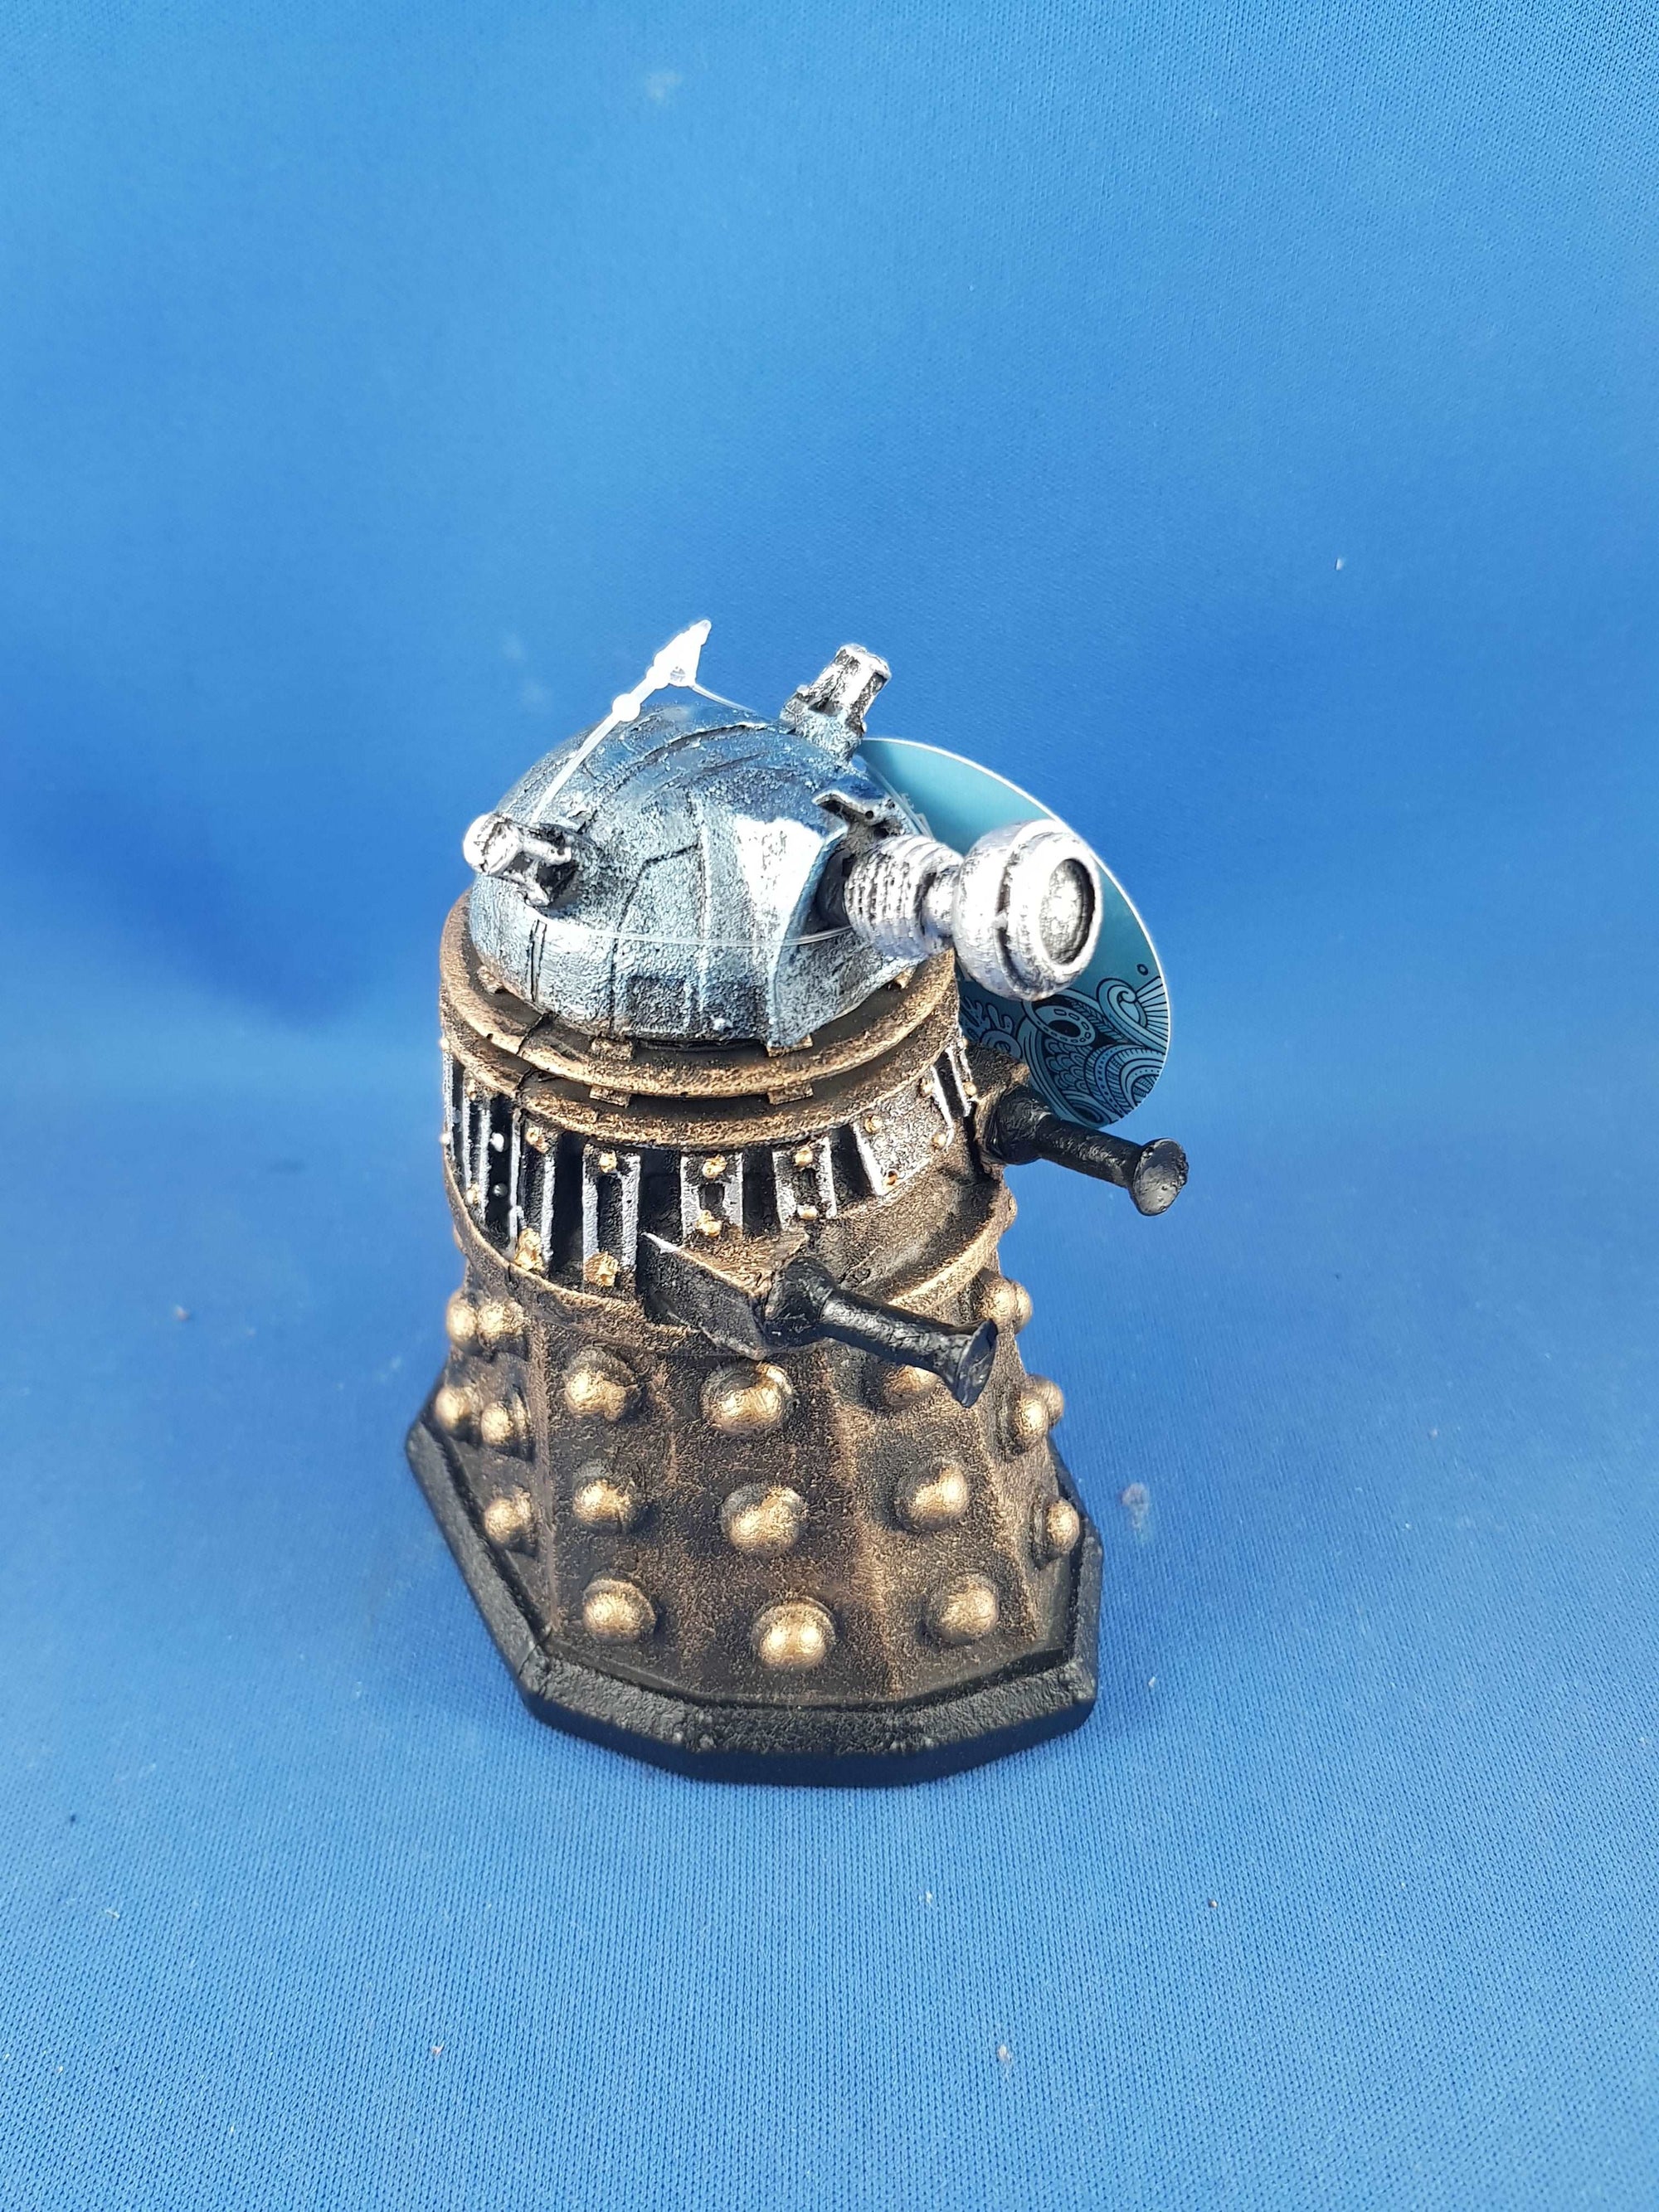 Dr Who Dalek in blue colour aquarium ornament